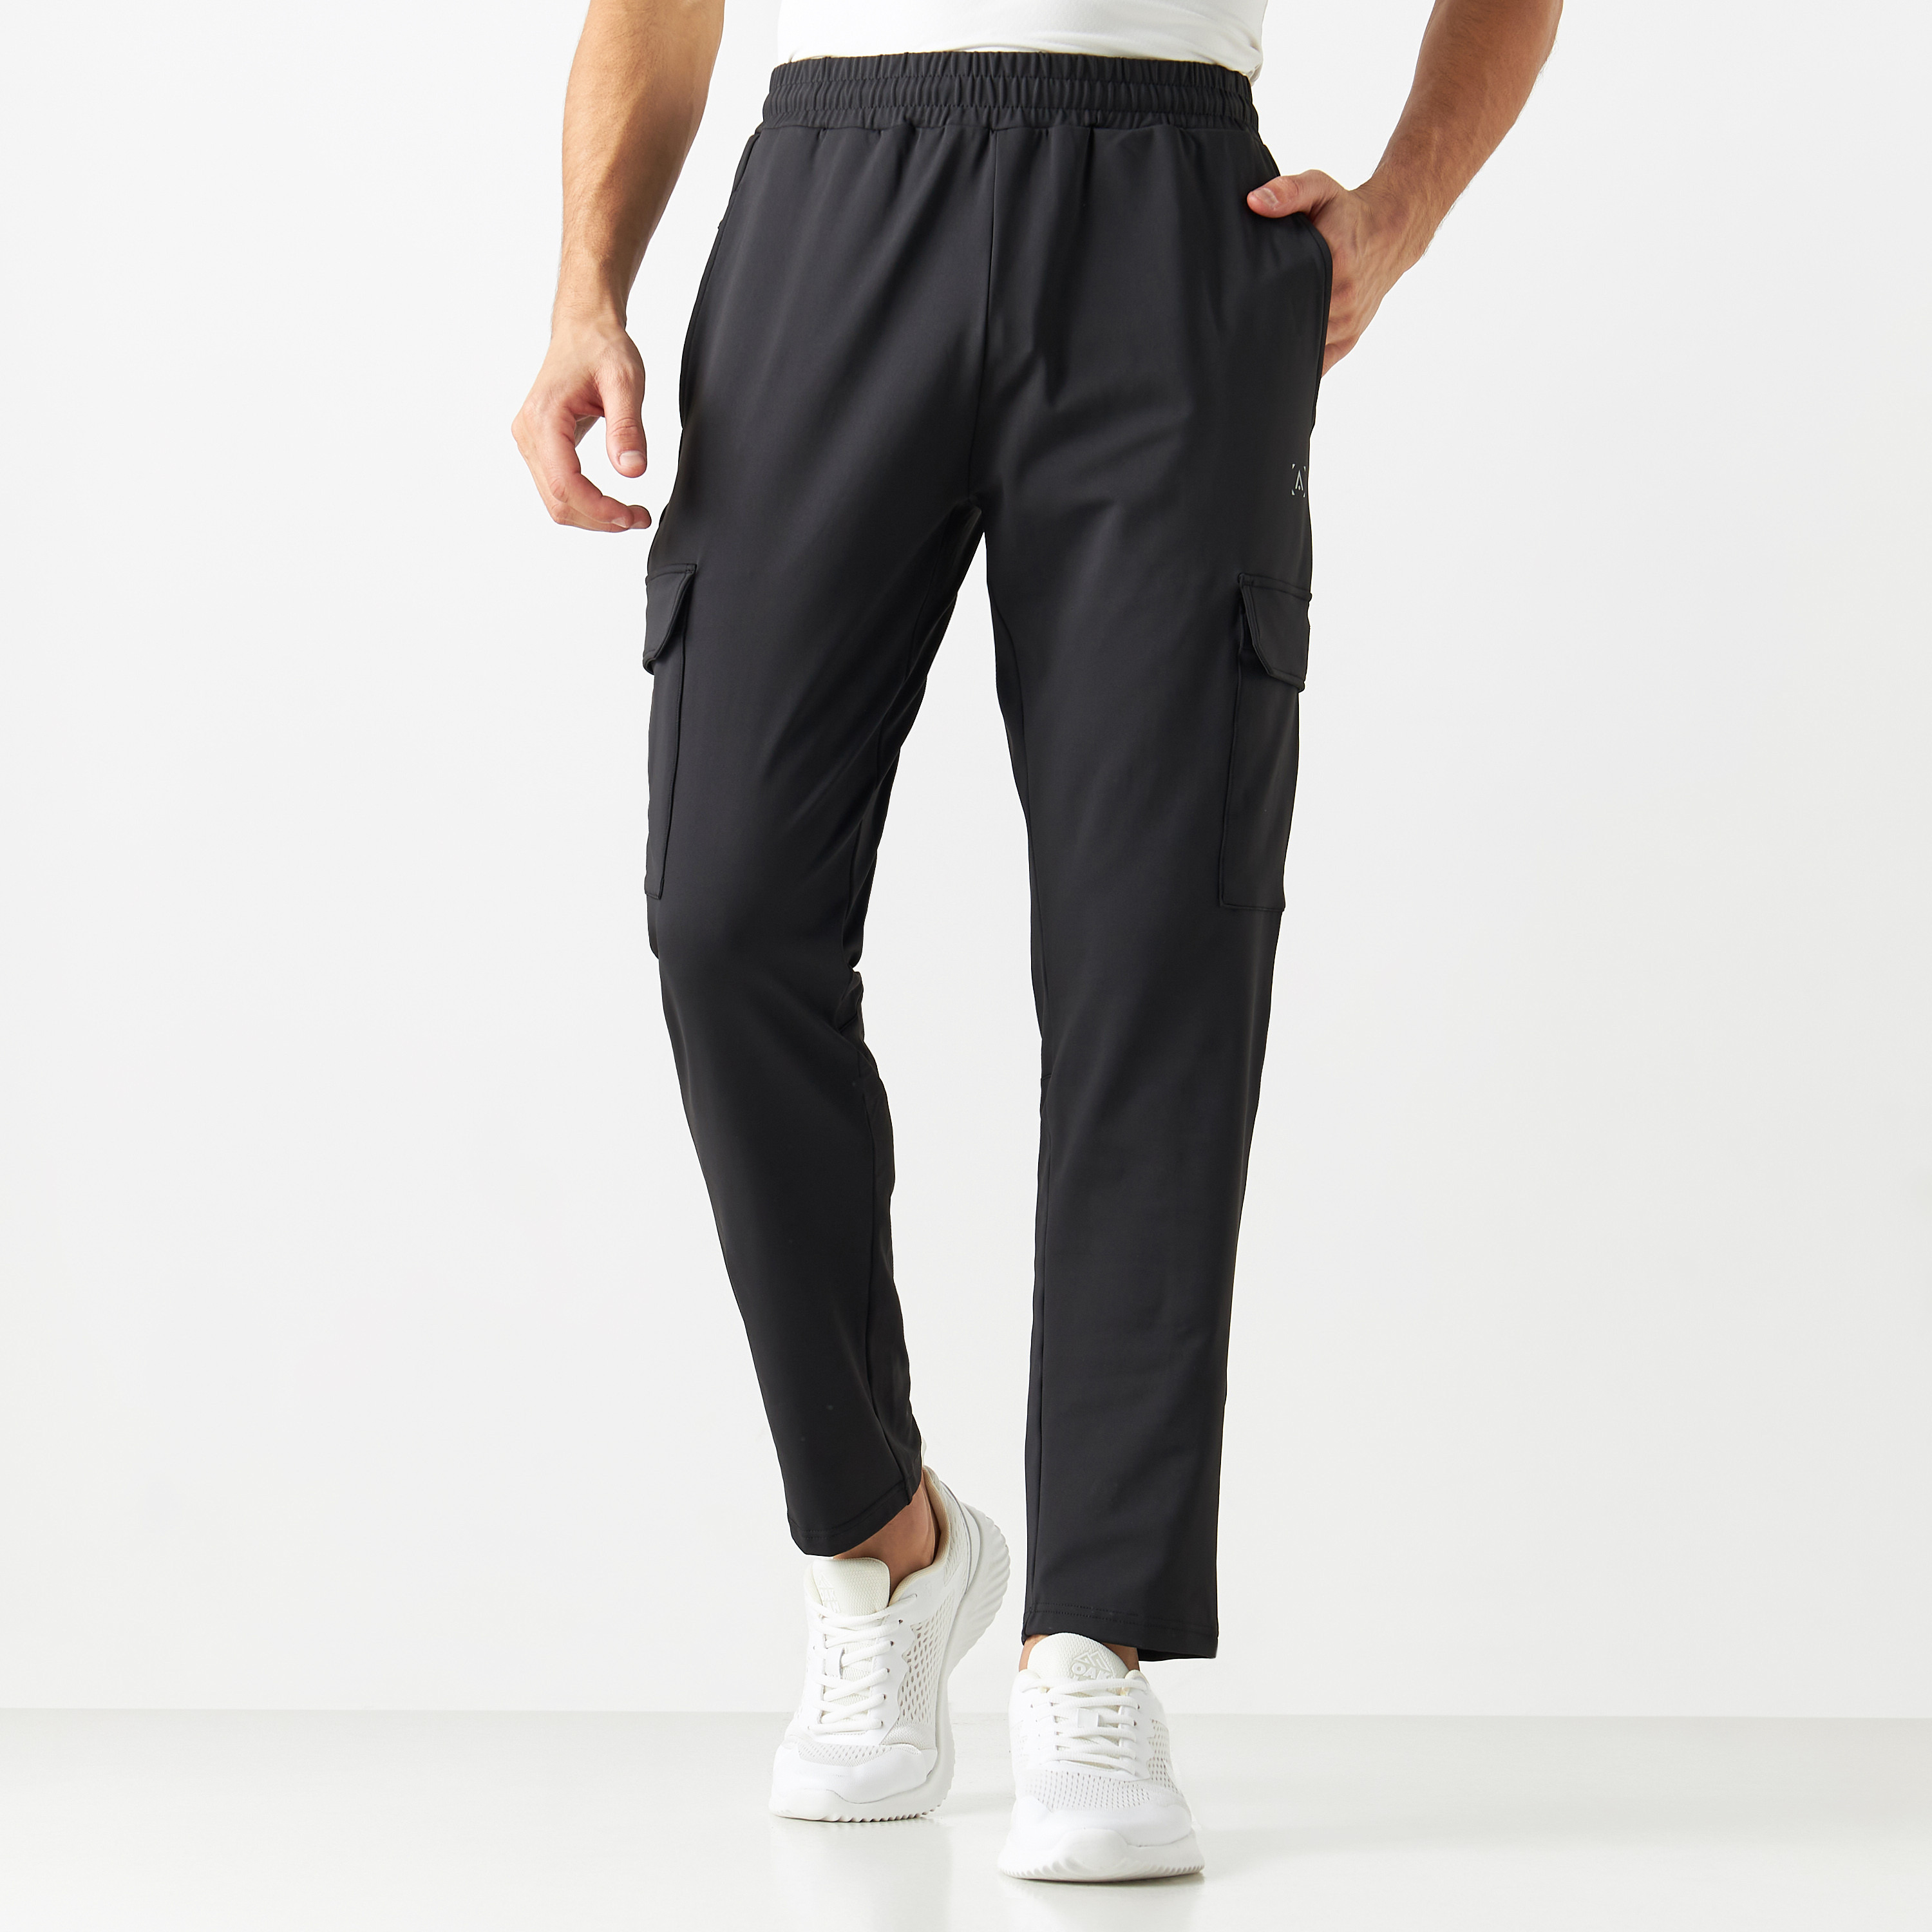 Track Pants- Grey Side Pocket Baggy Pants for Men Online | Powerlook